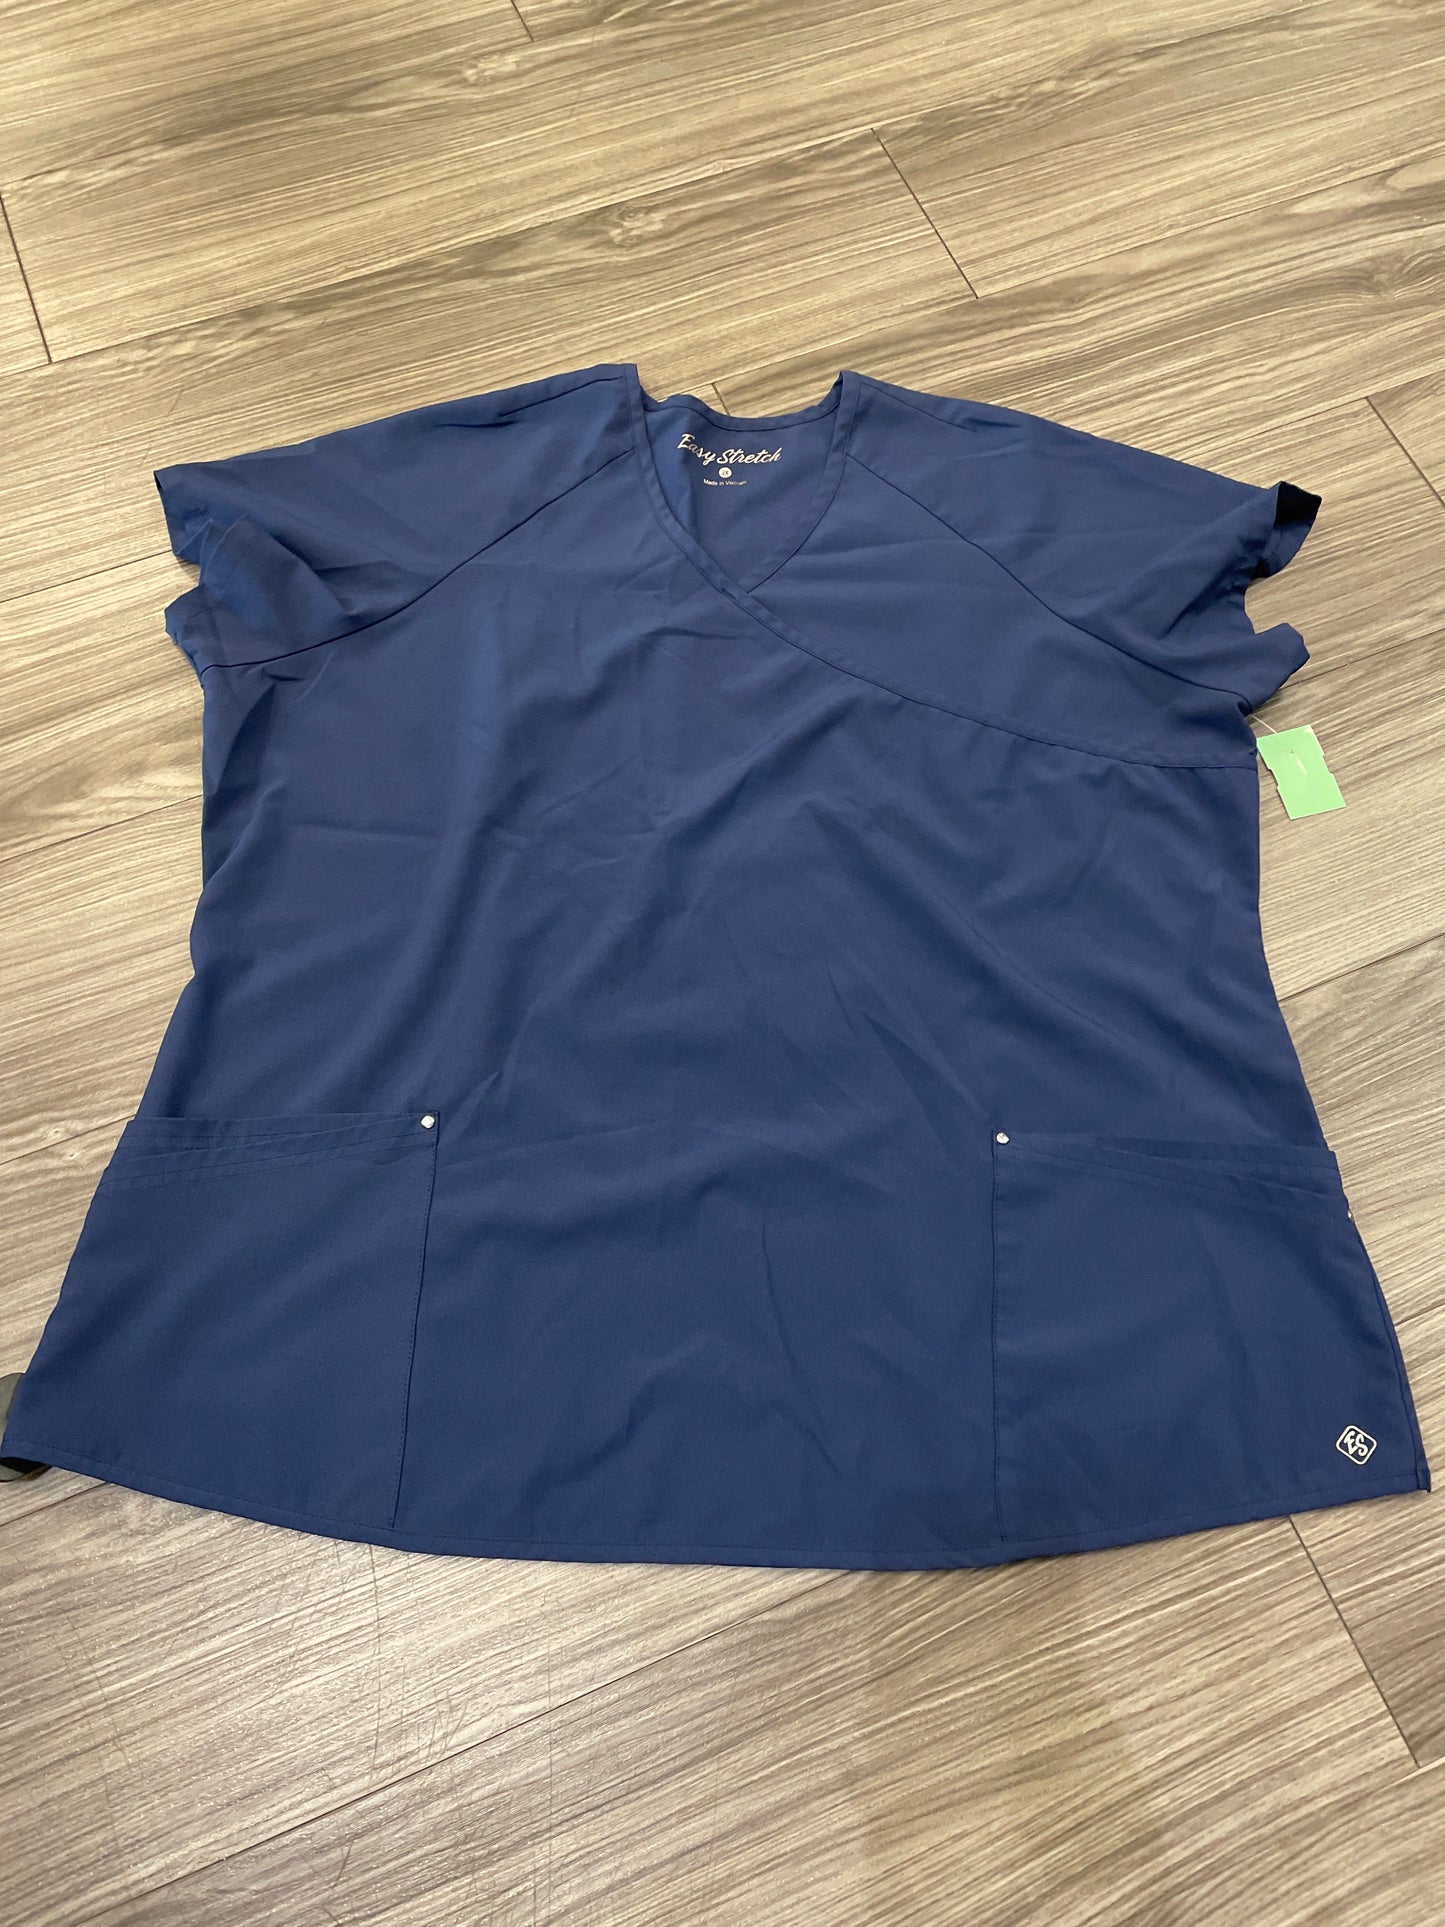 Blue Top Short Sleeve Clothes Mentor, Size Xxl